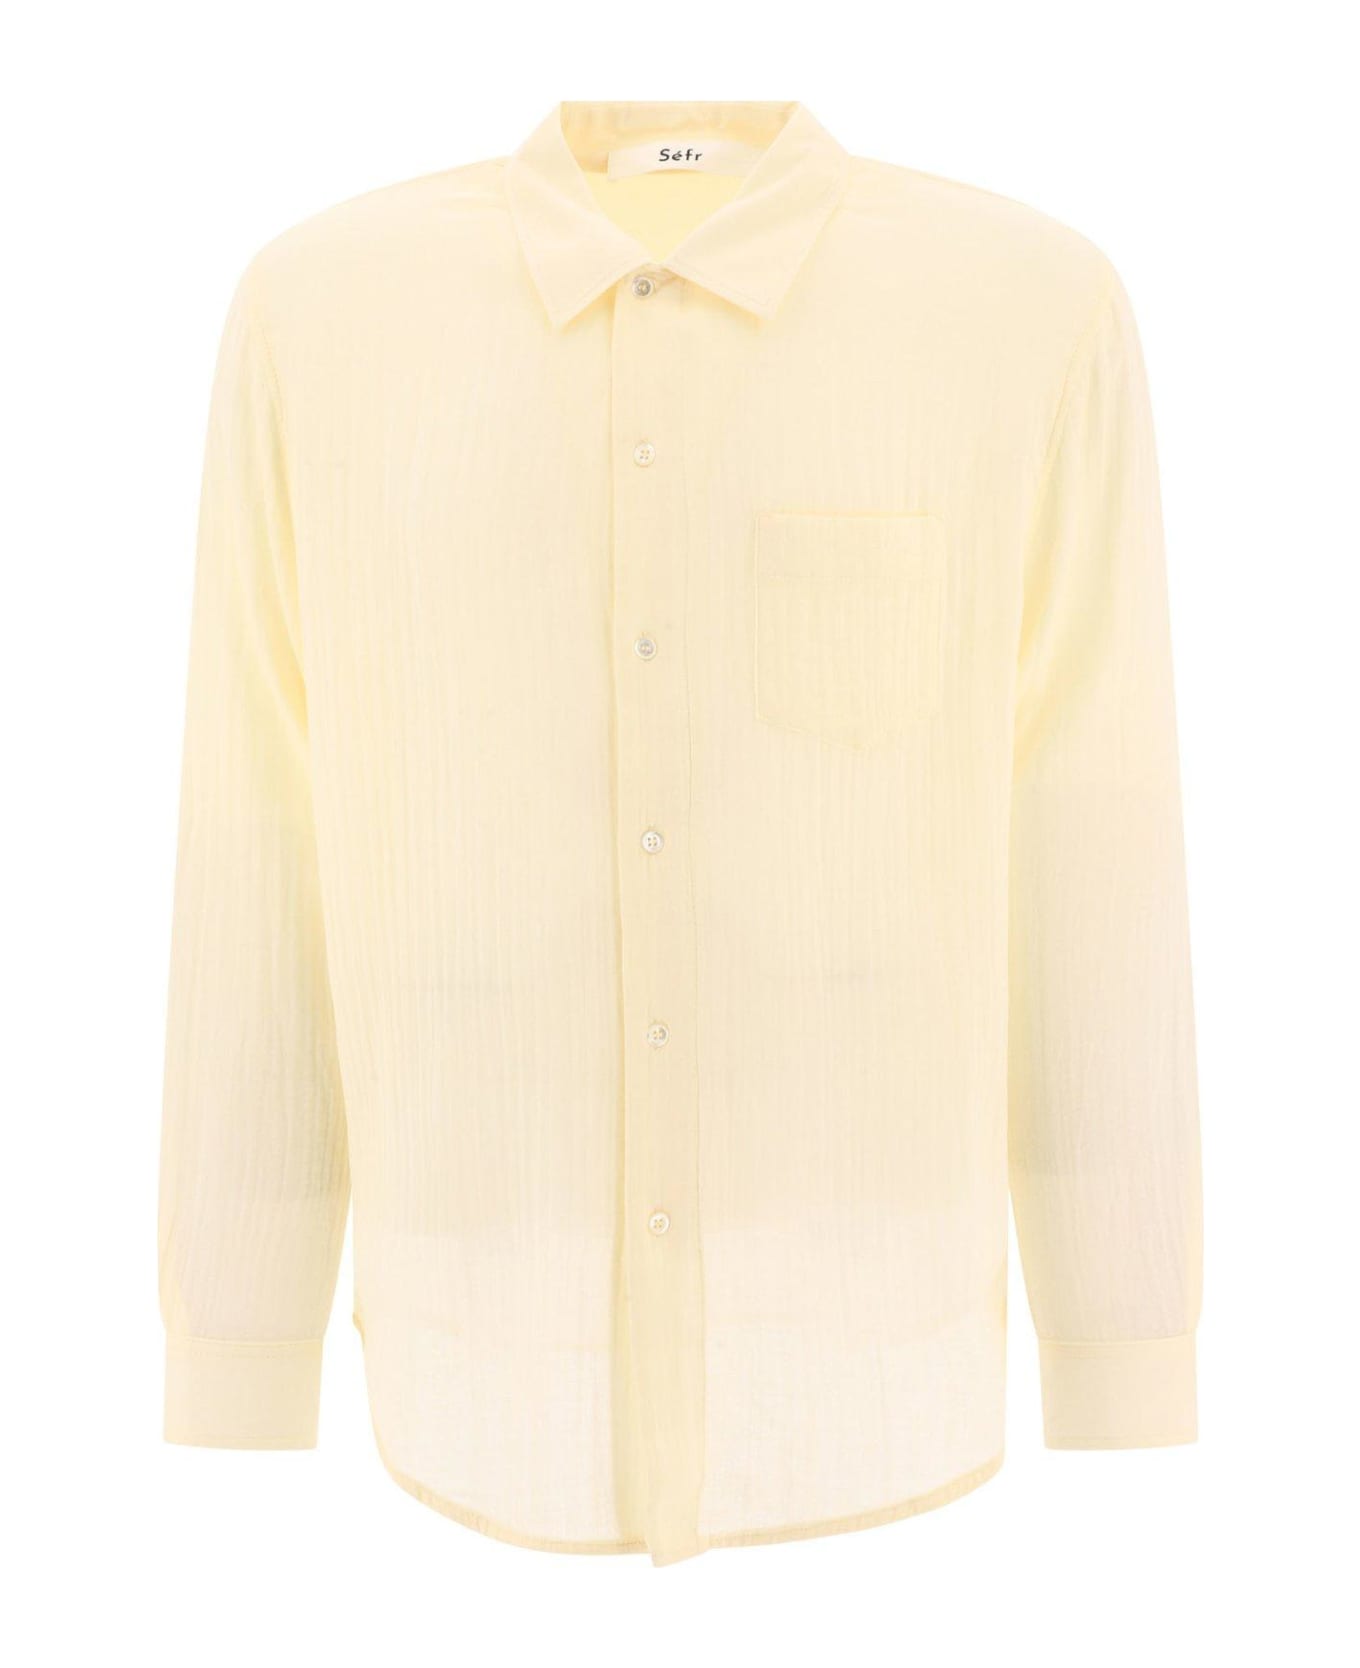 Séfr Long Sleeved Buttoned Shirt - Vanilla White